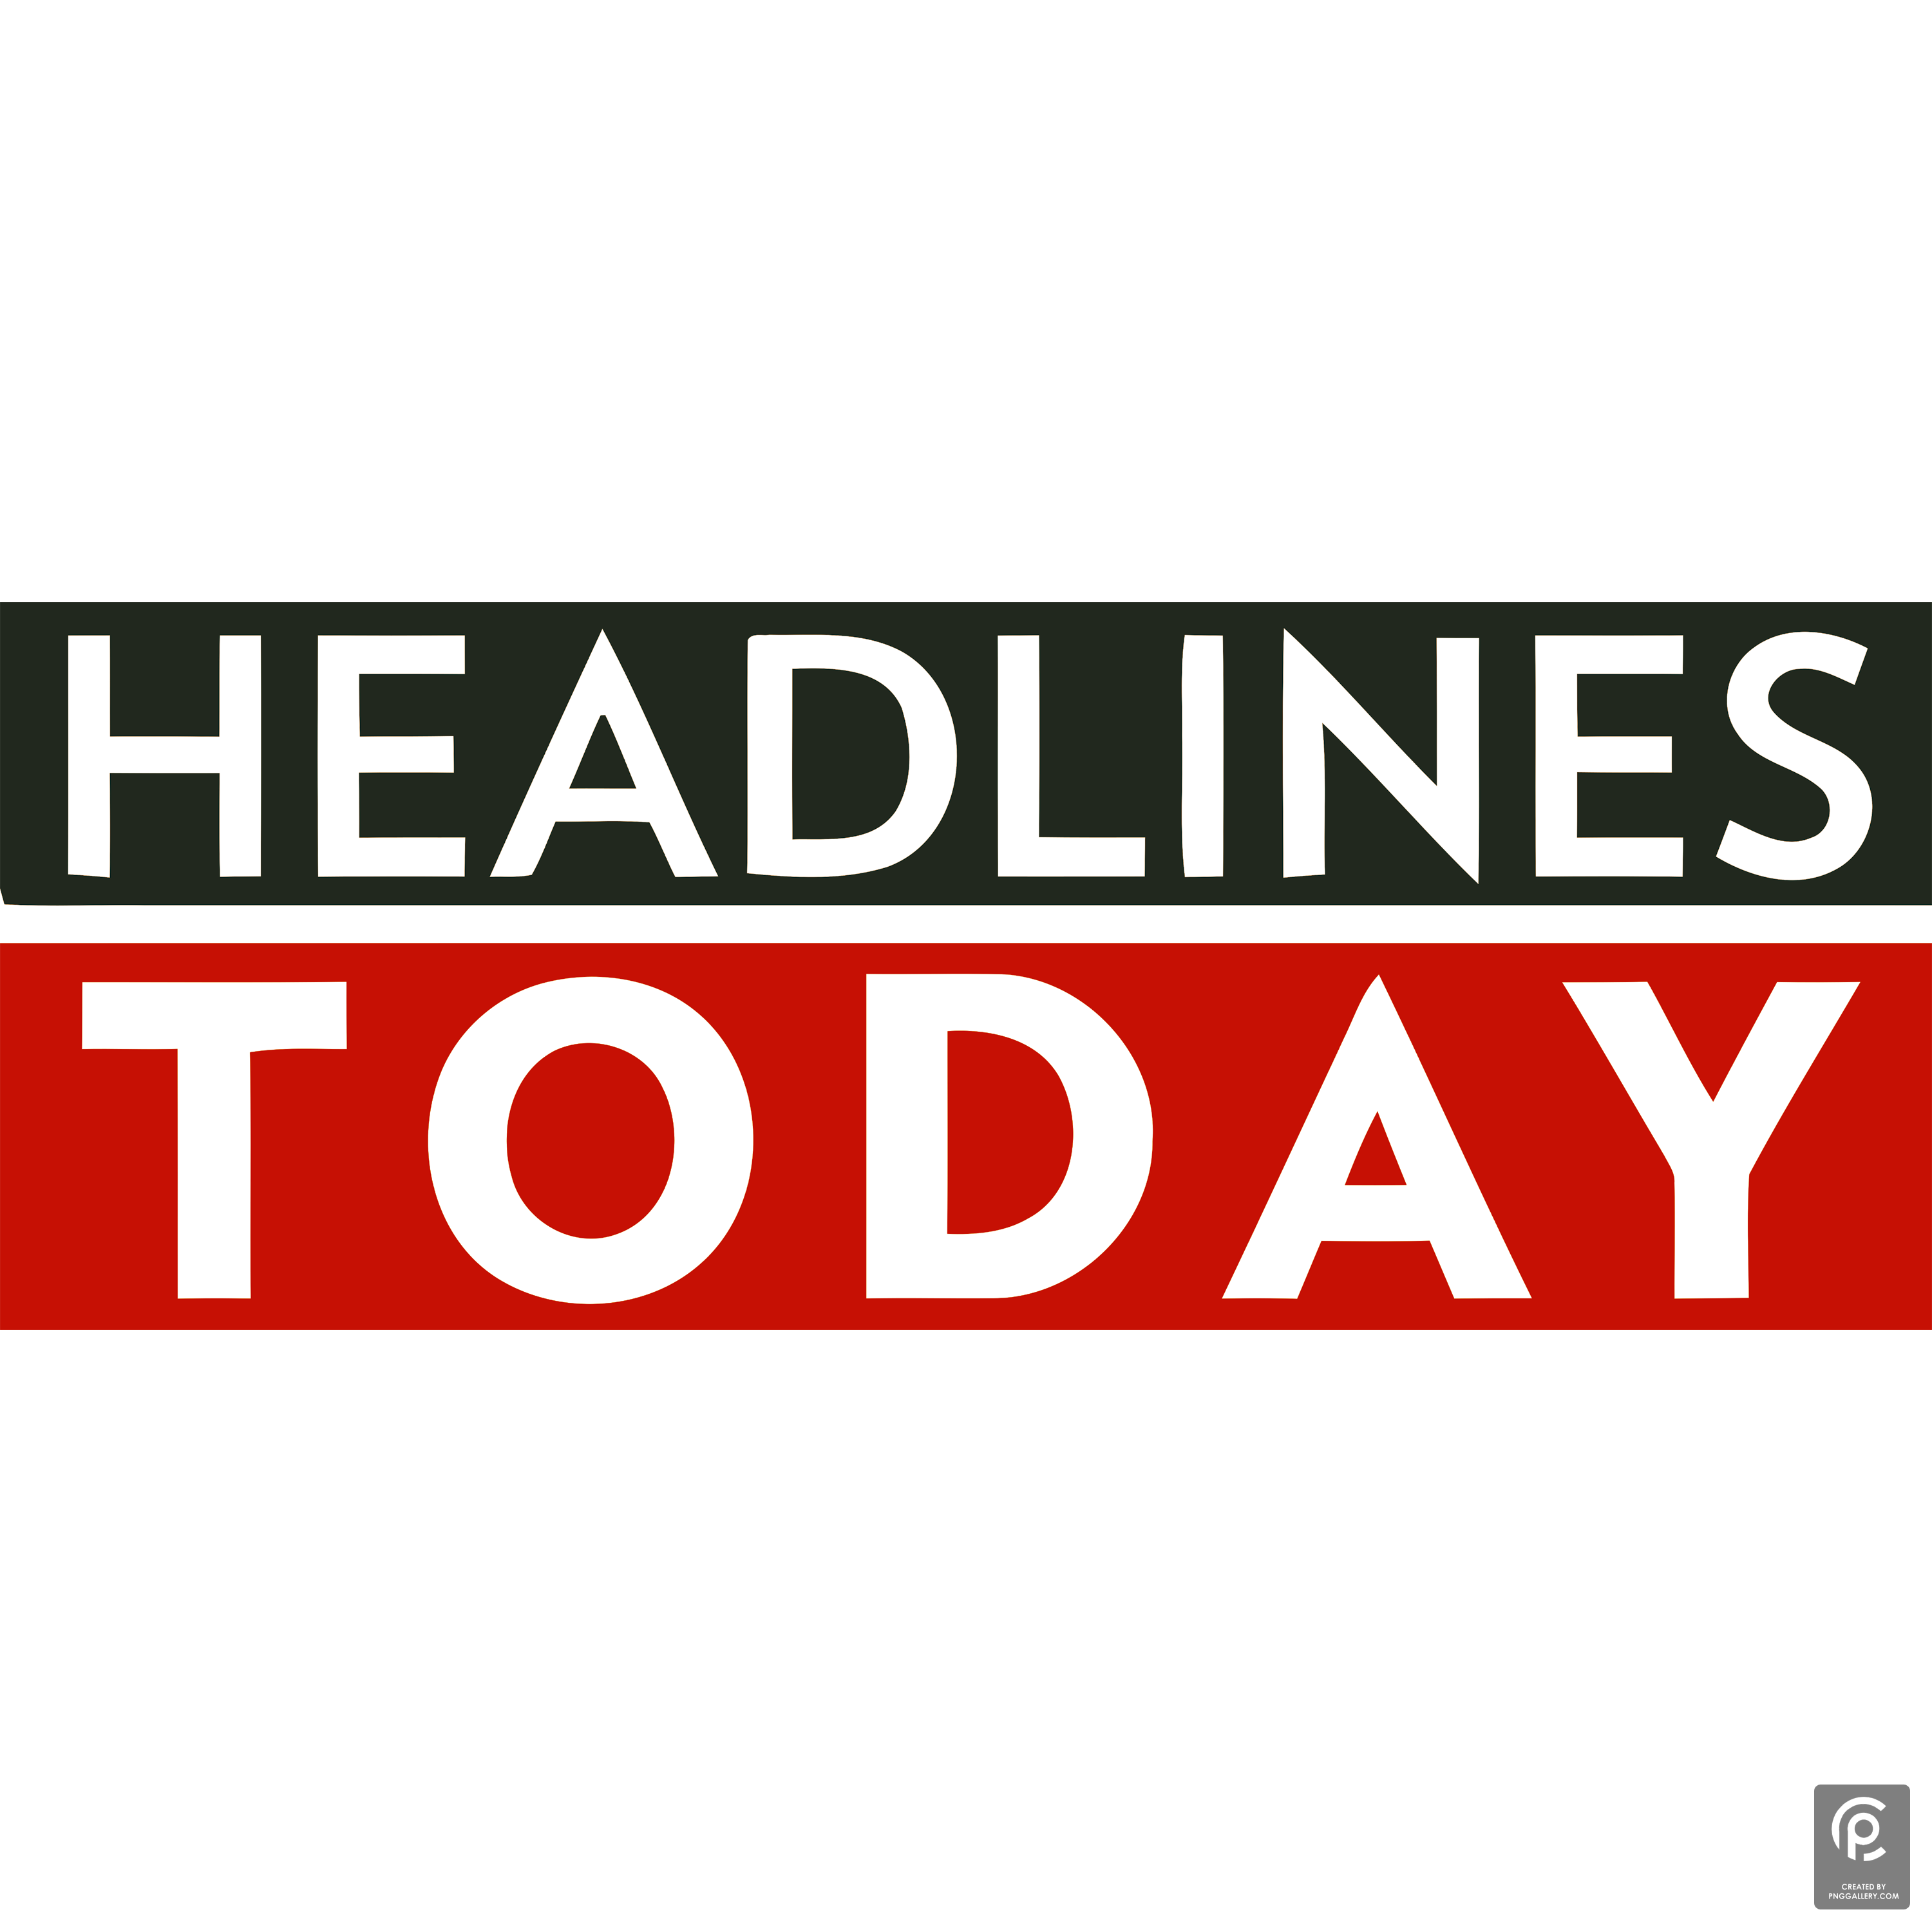 Headlines Today Logo Transparent Picture